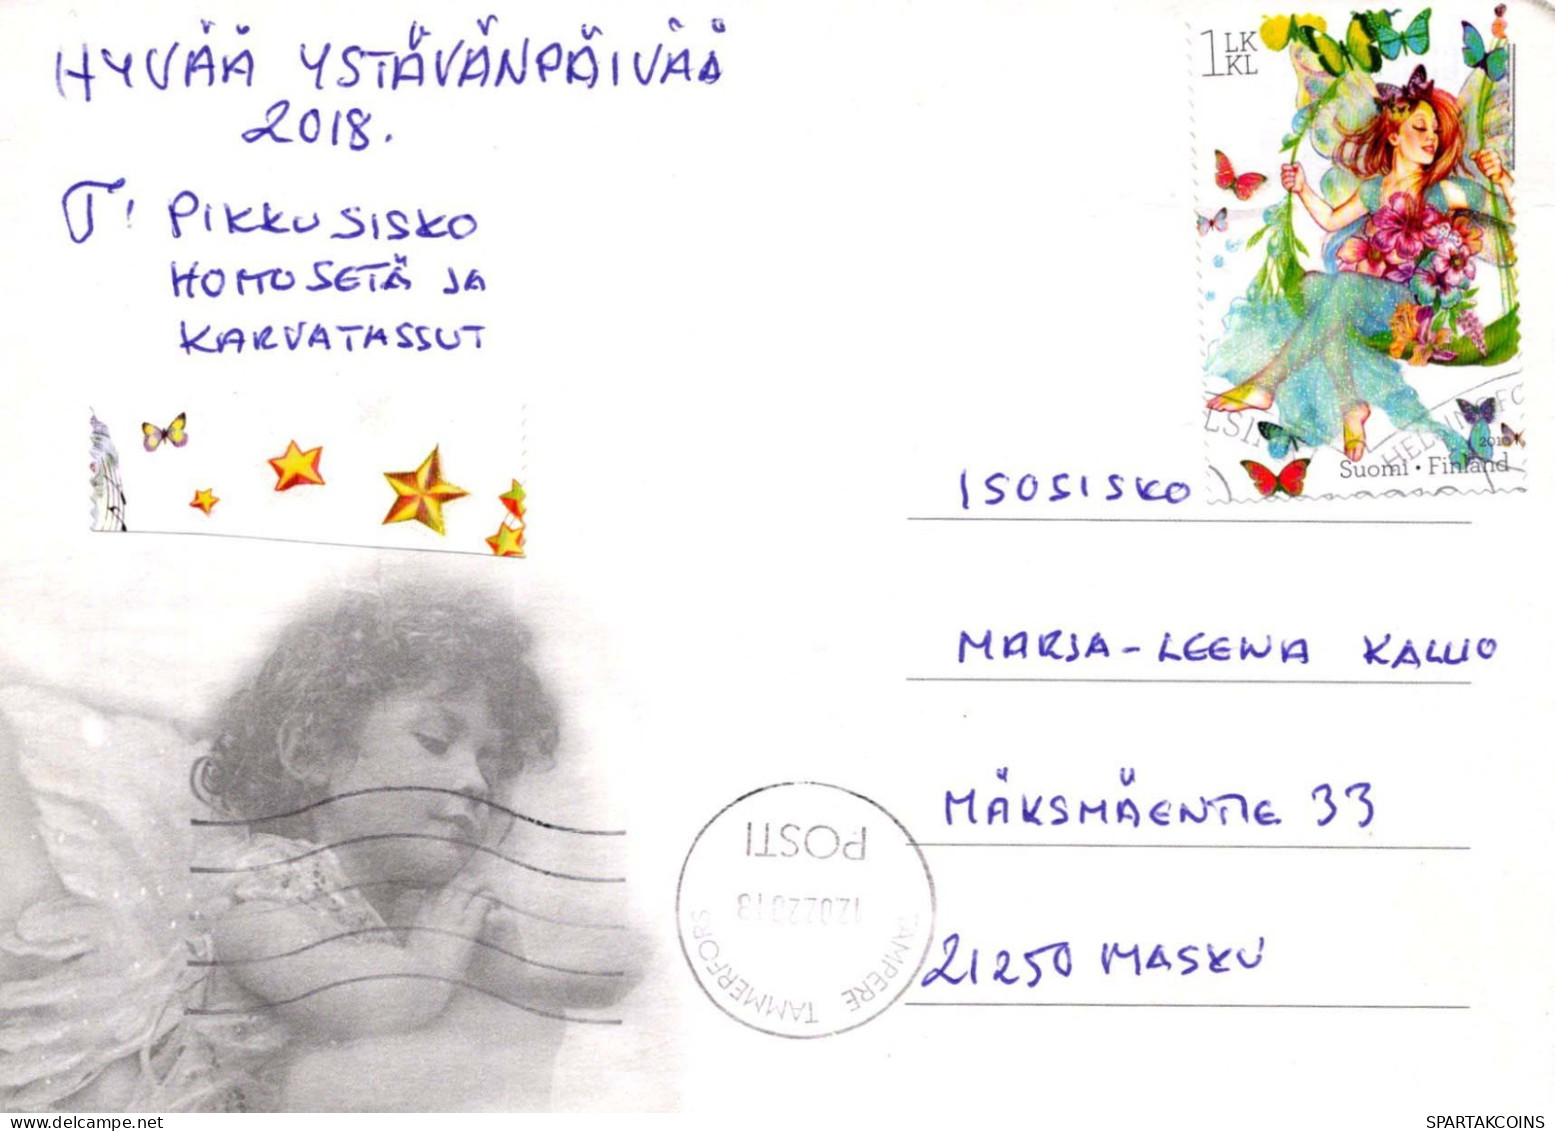 ANGE Noël Vintage Carte Postale CPSM #PBP590.A - Angels